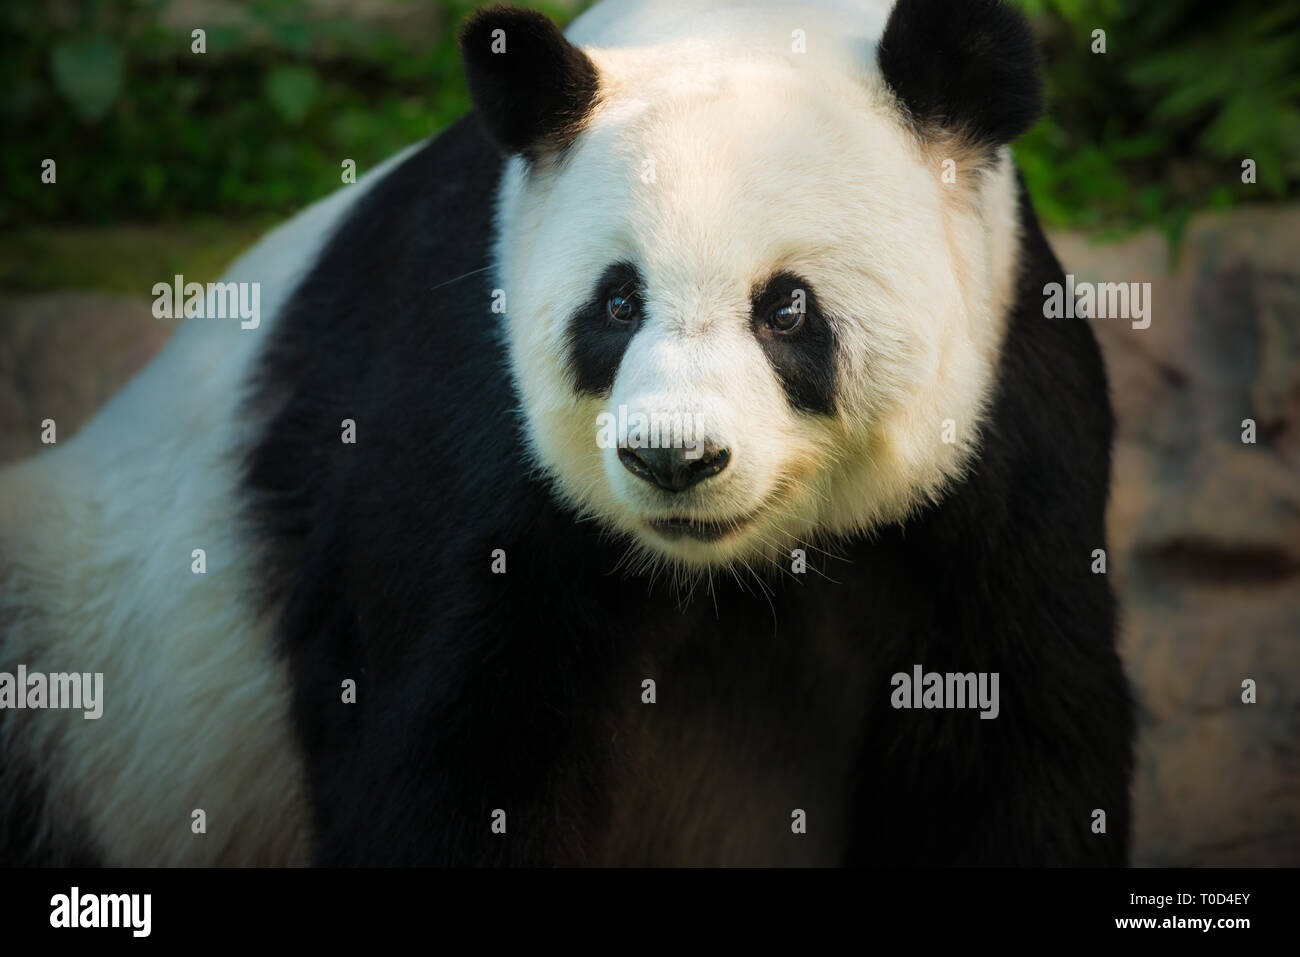 The Giant Panda Ailuropoda melanoleuca looks directly towards the camera Stock Photo